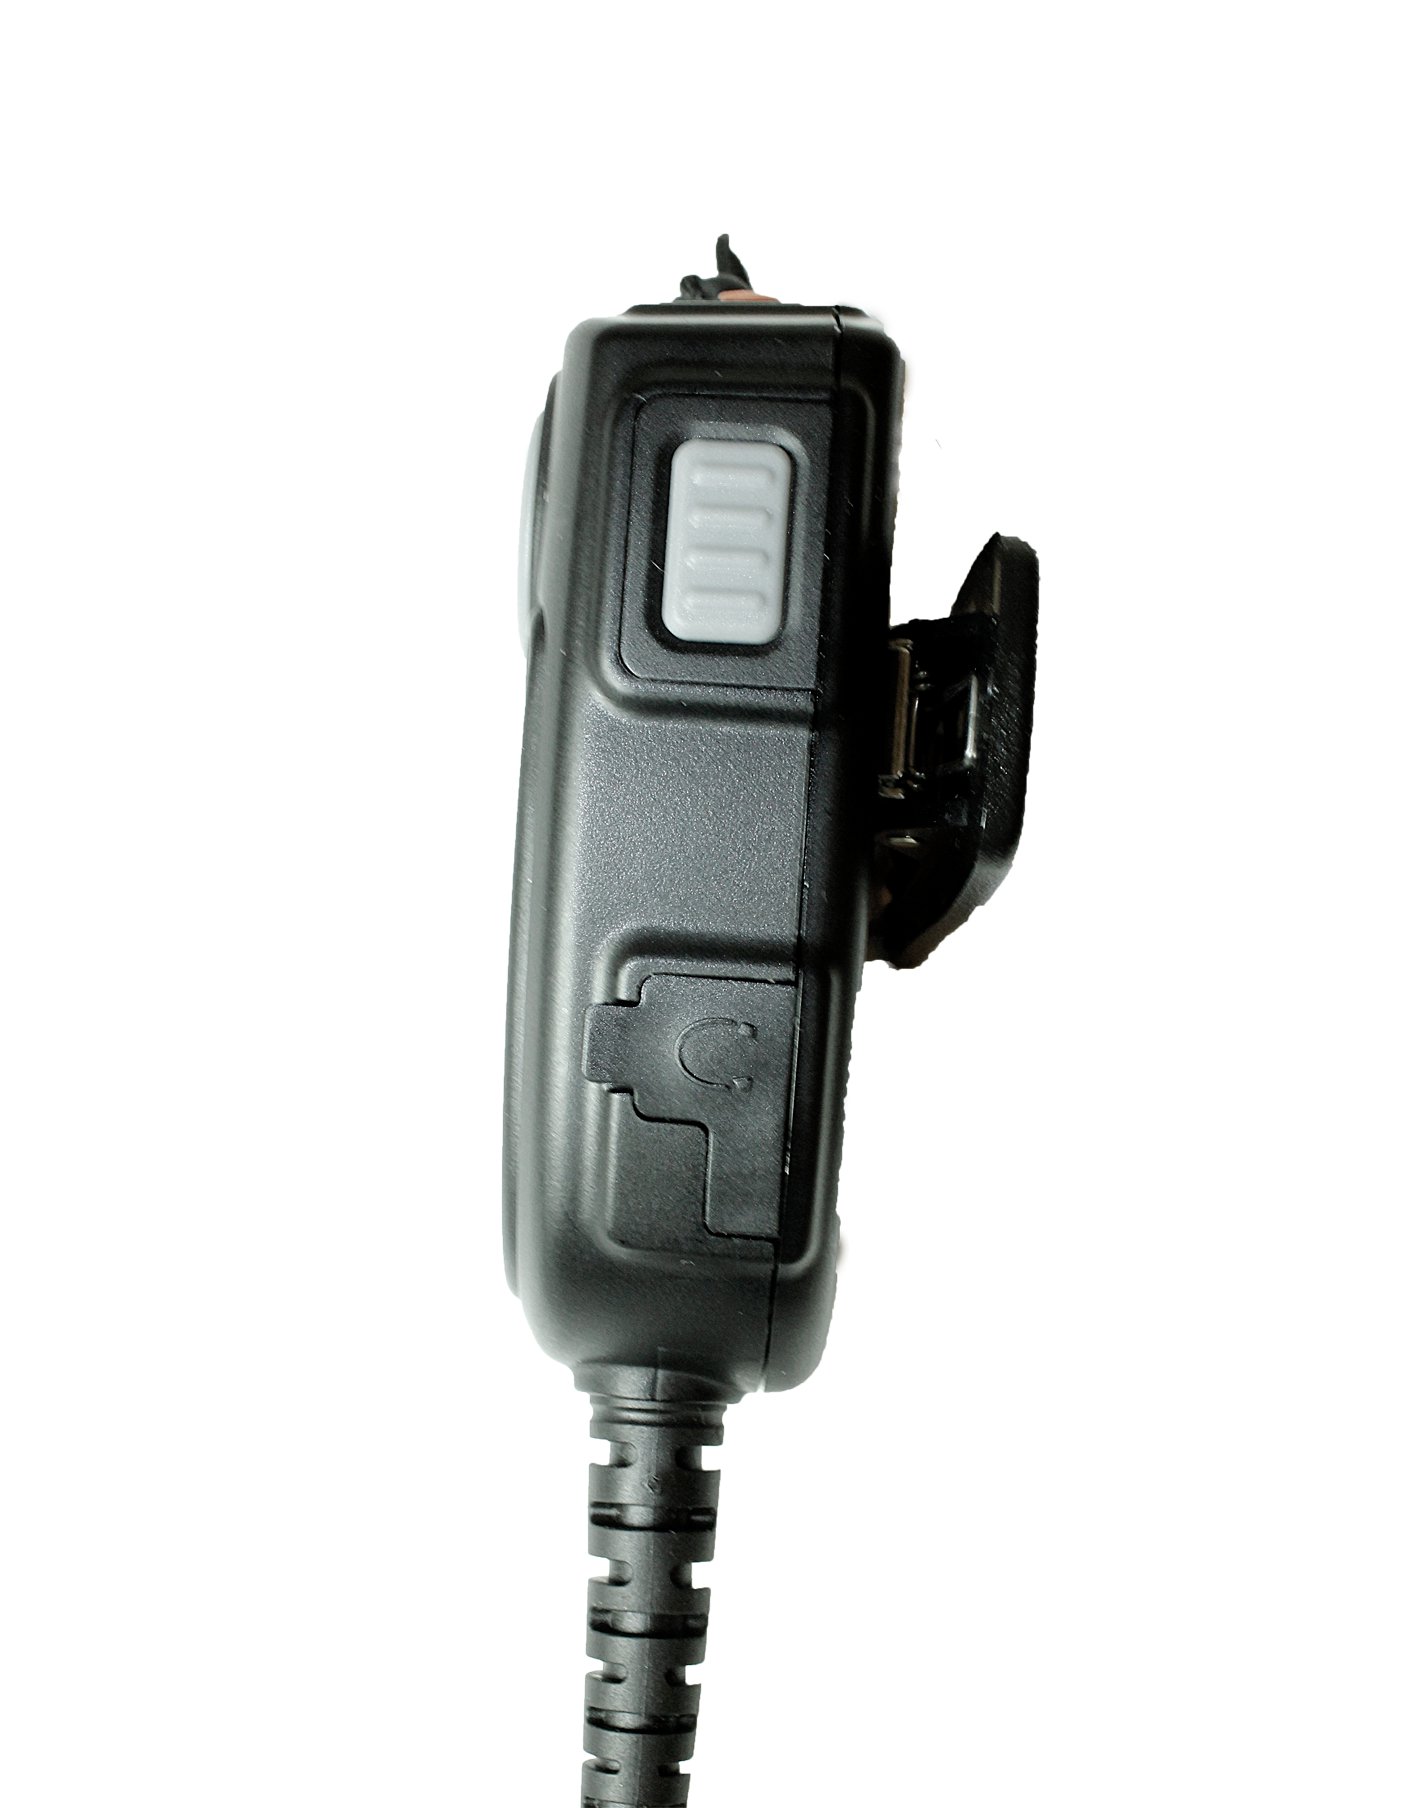 TITAN Lautsprechermikrofon MM20 mit Nexus 03 passend für Motorola MXP600, R7, R7A